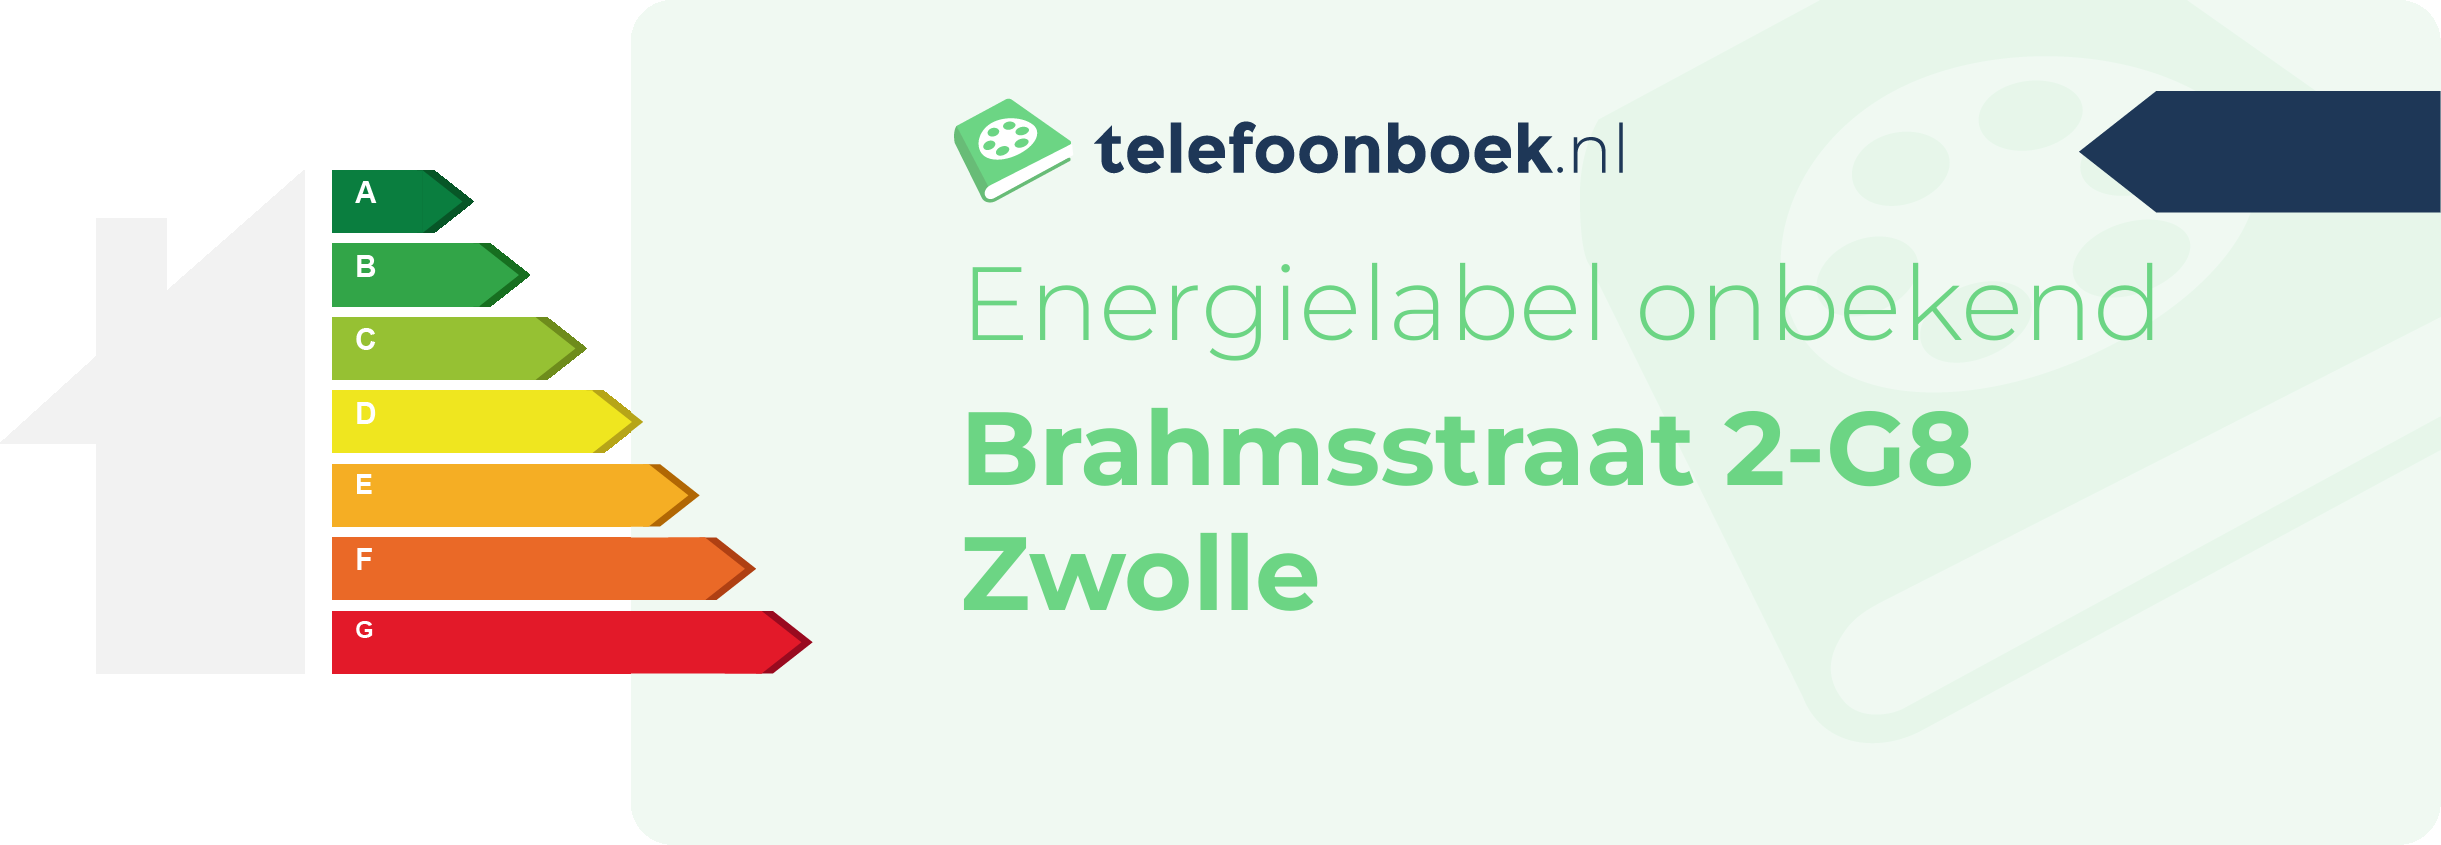 Energielabel Brahmsstraat 2-G8 Zwolle